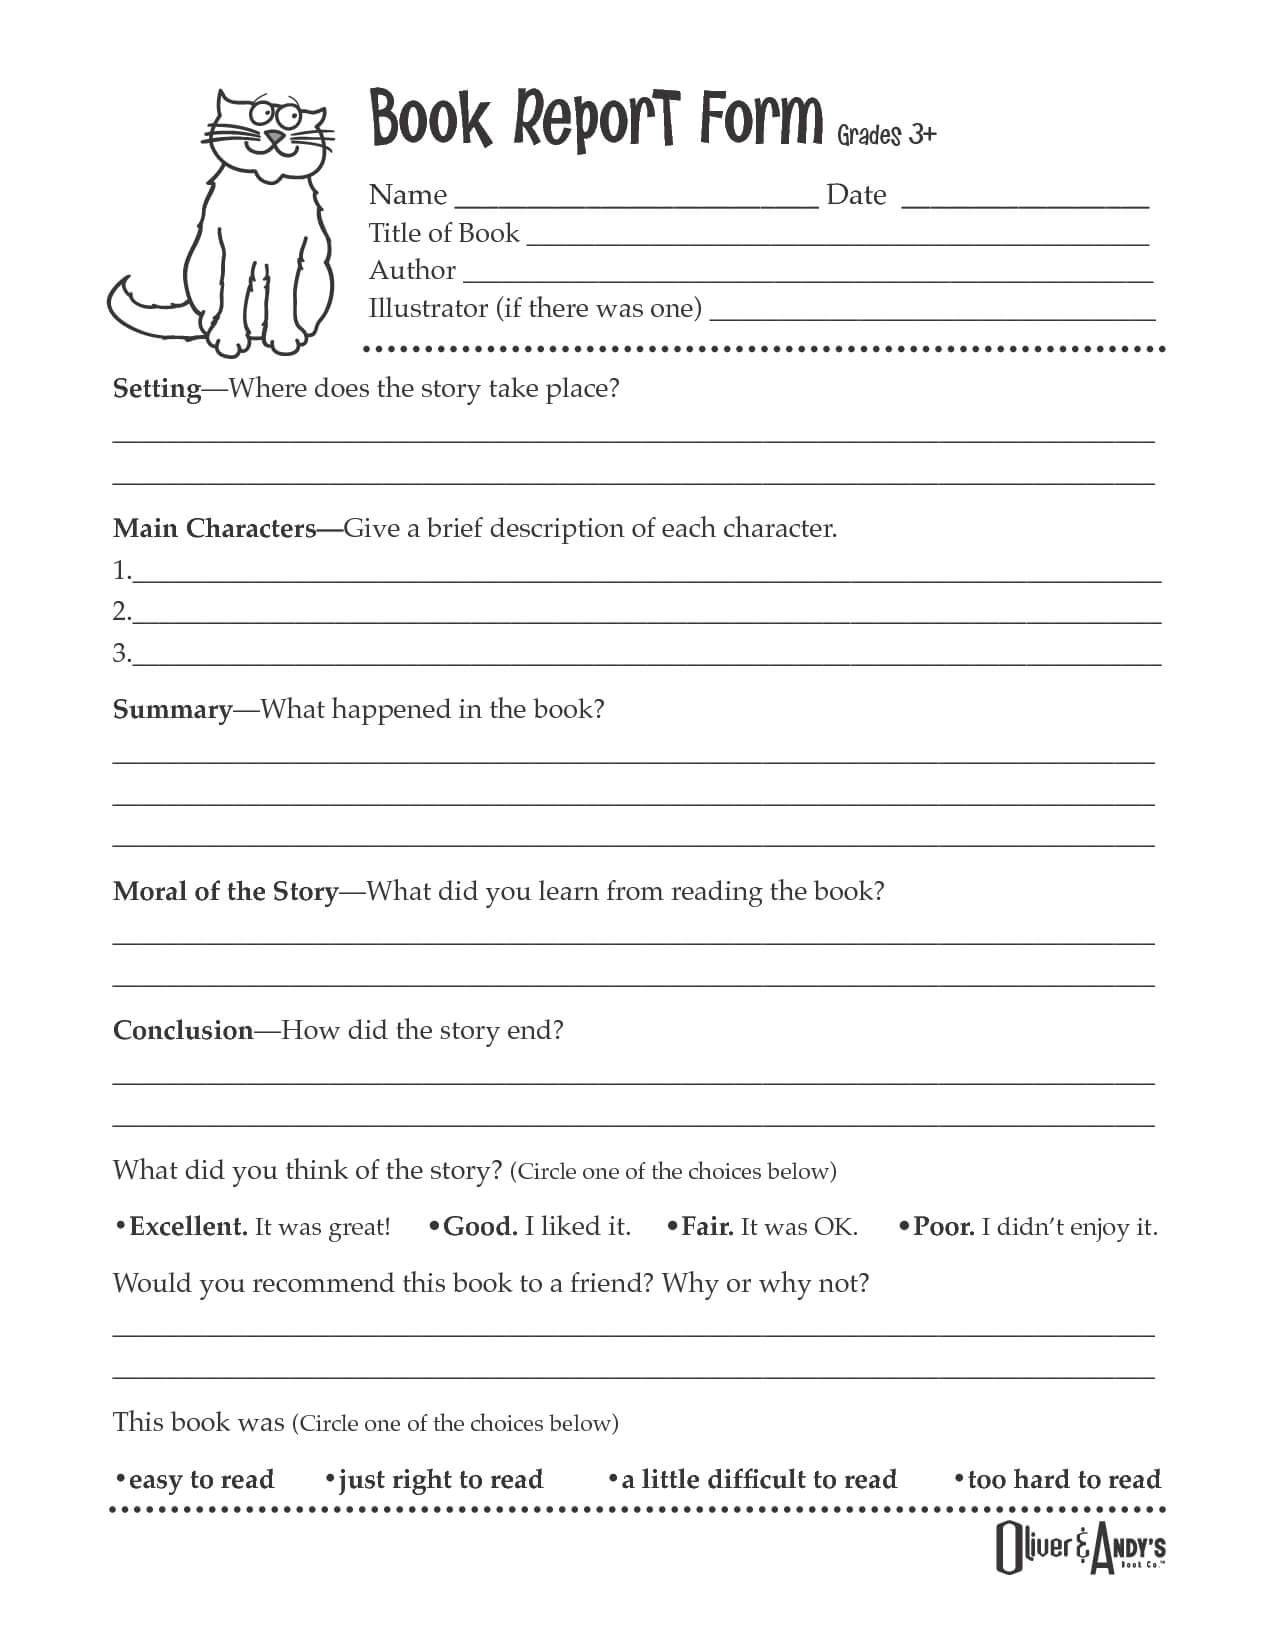 Second Grade Book Report Template | Book Report Form Grades With 6Th Grade Book Report Template